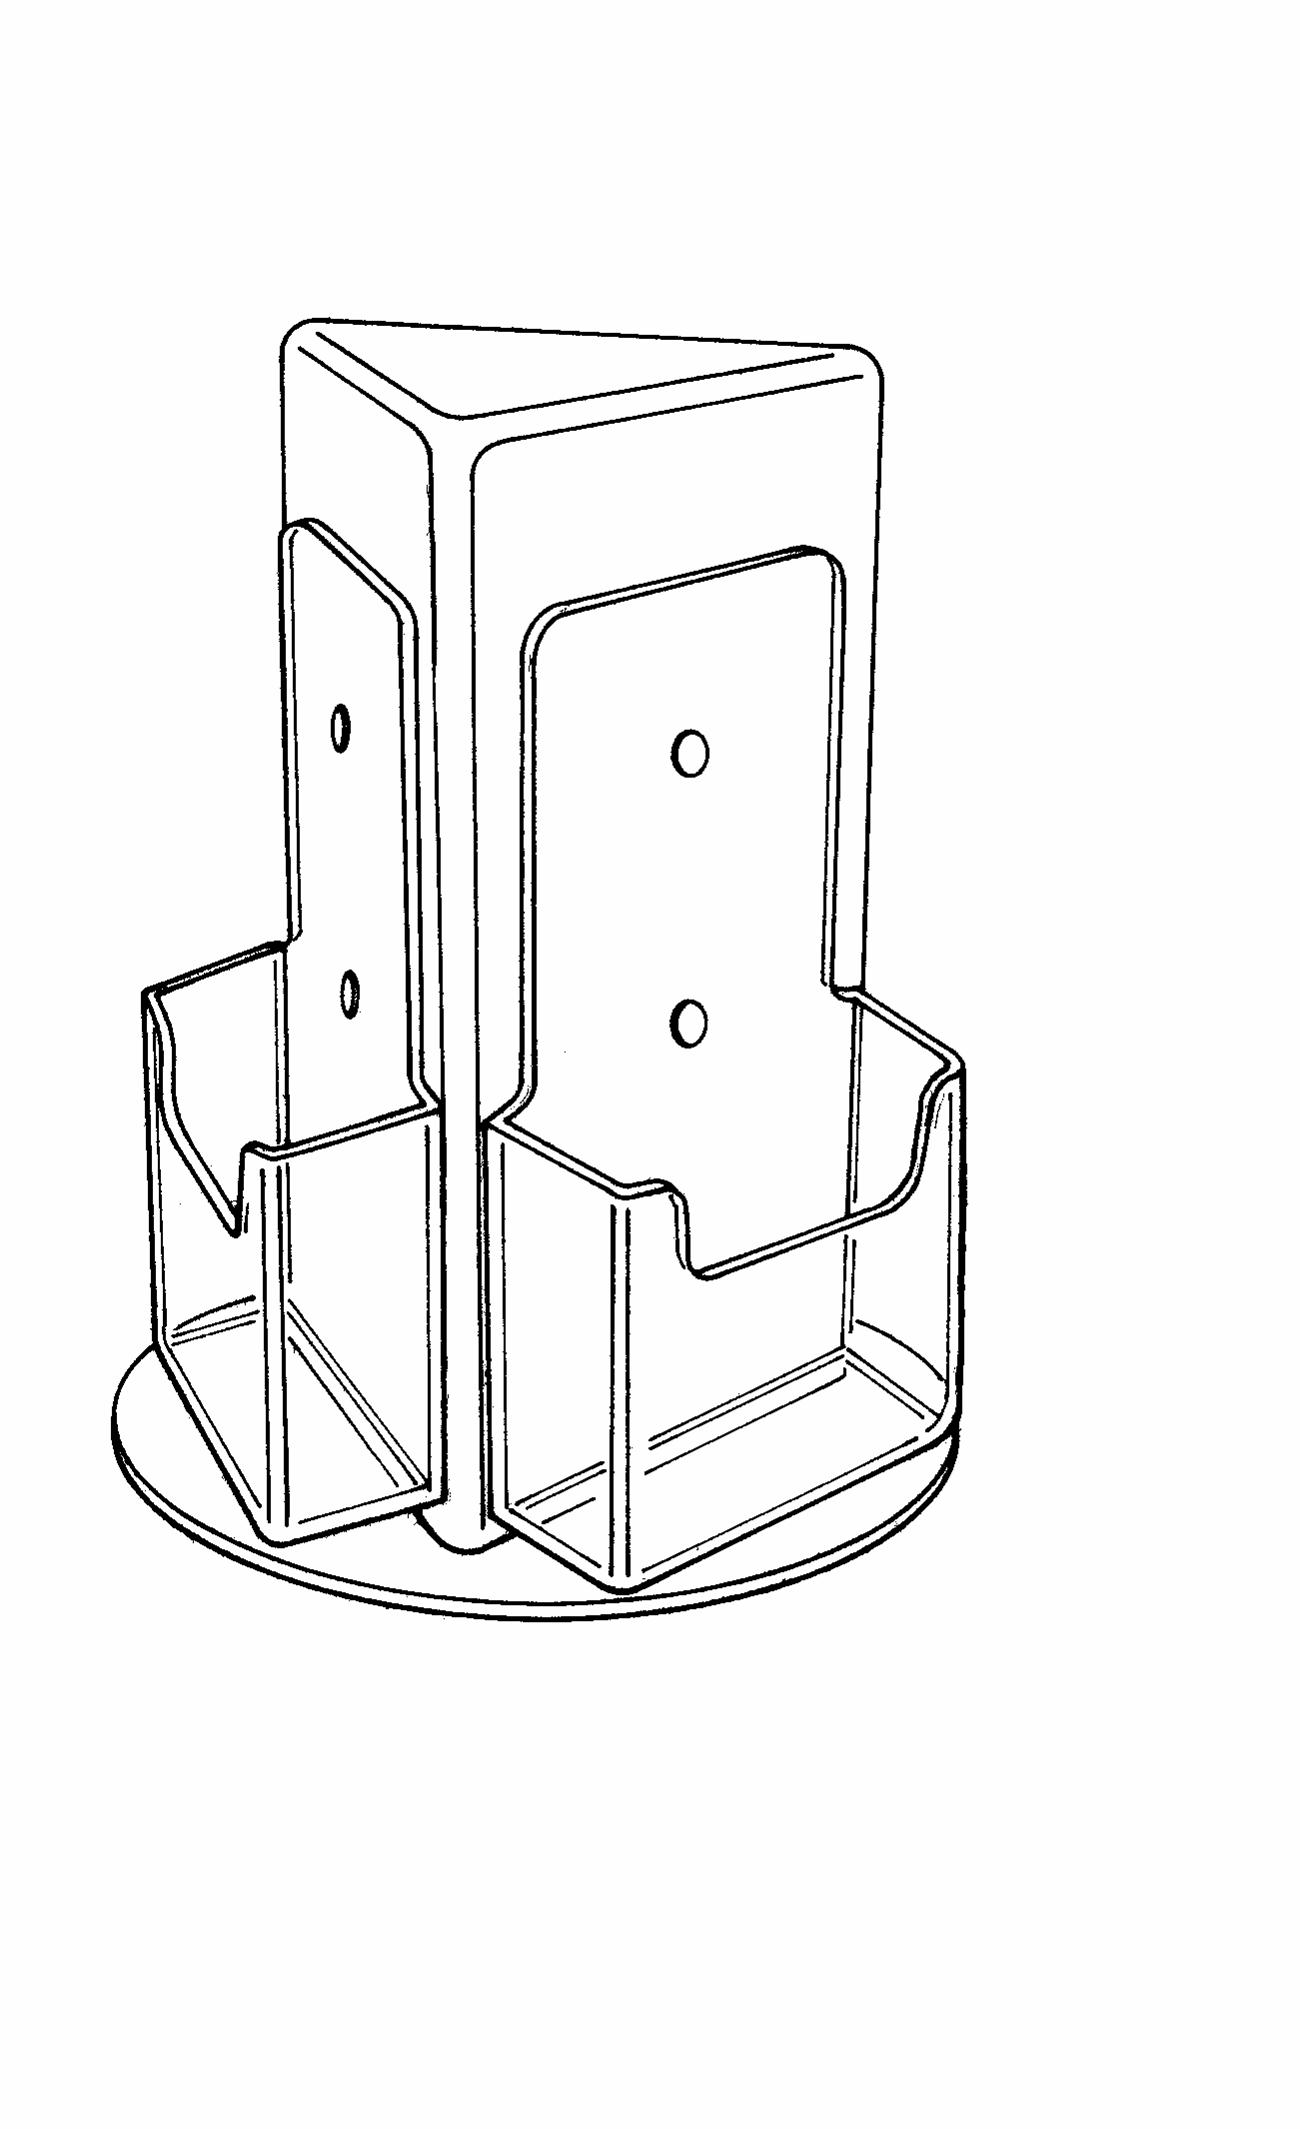 Tri-fold Countertop Rotator.         Categ  12-97